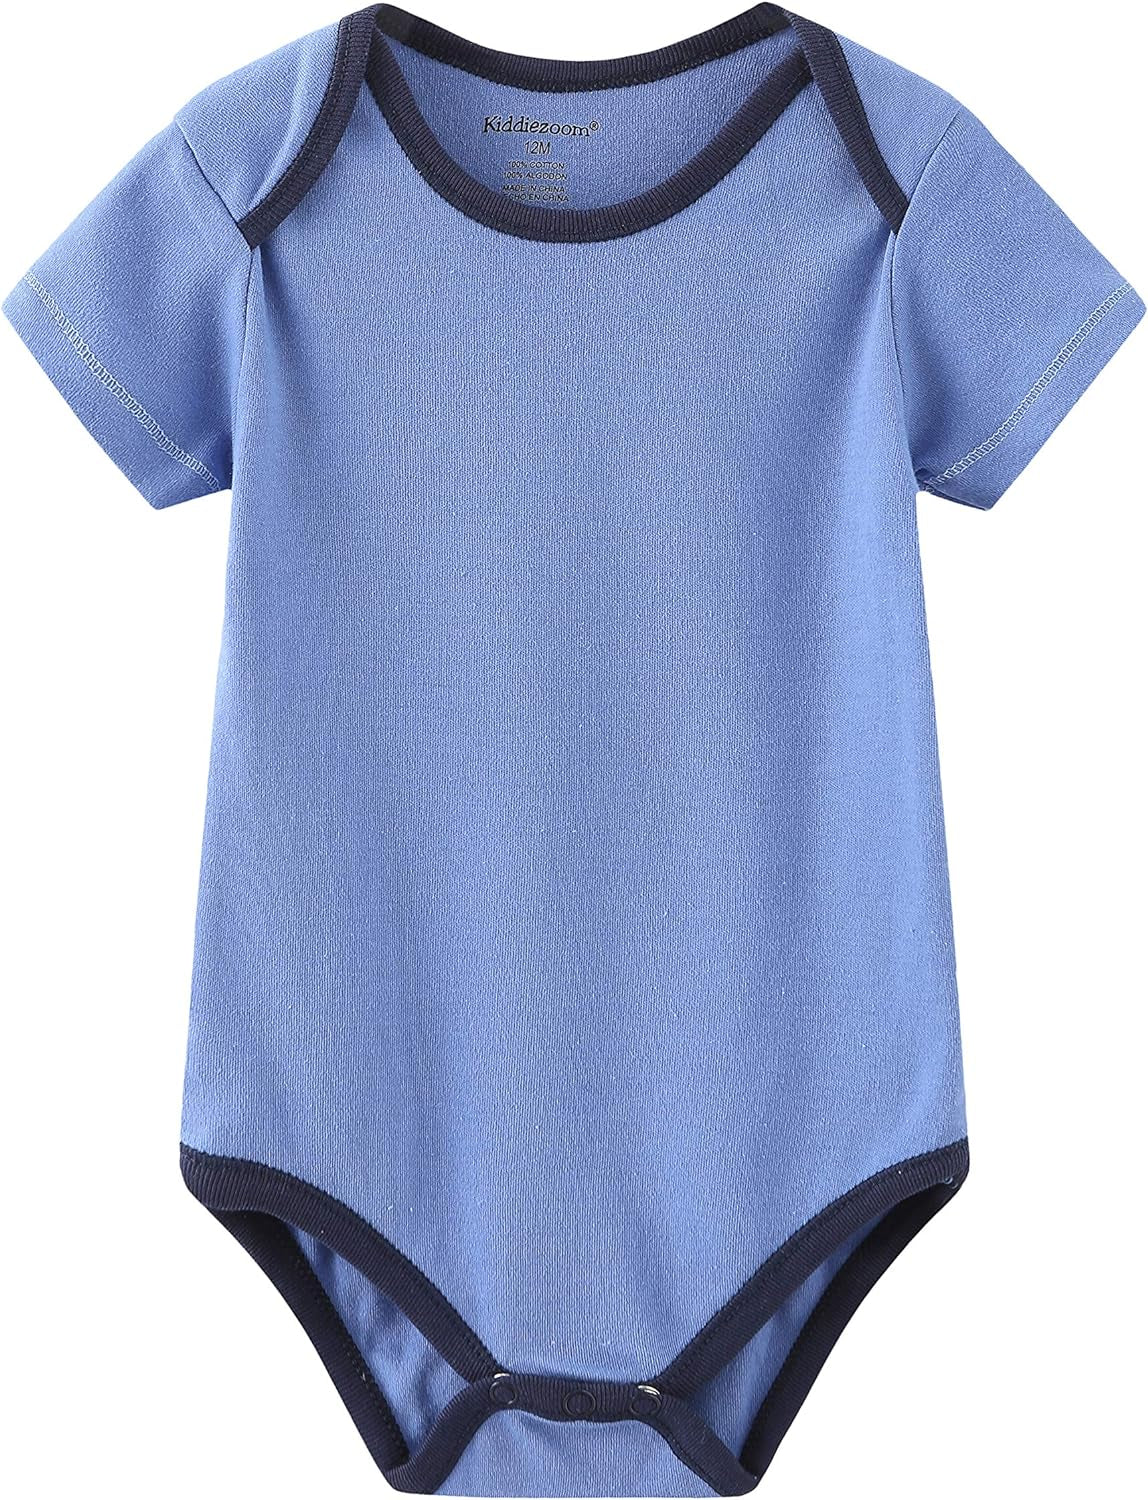 Newborn Baby Unisex Cotton Bodysuits 0-12 Months Baby Gift 5-Pack Baby Clothes